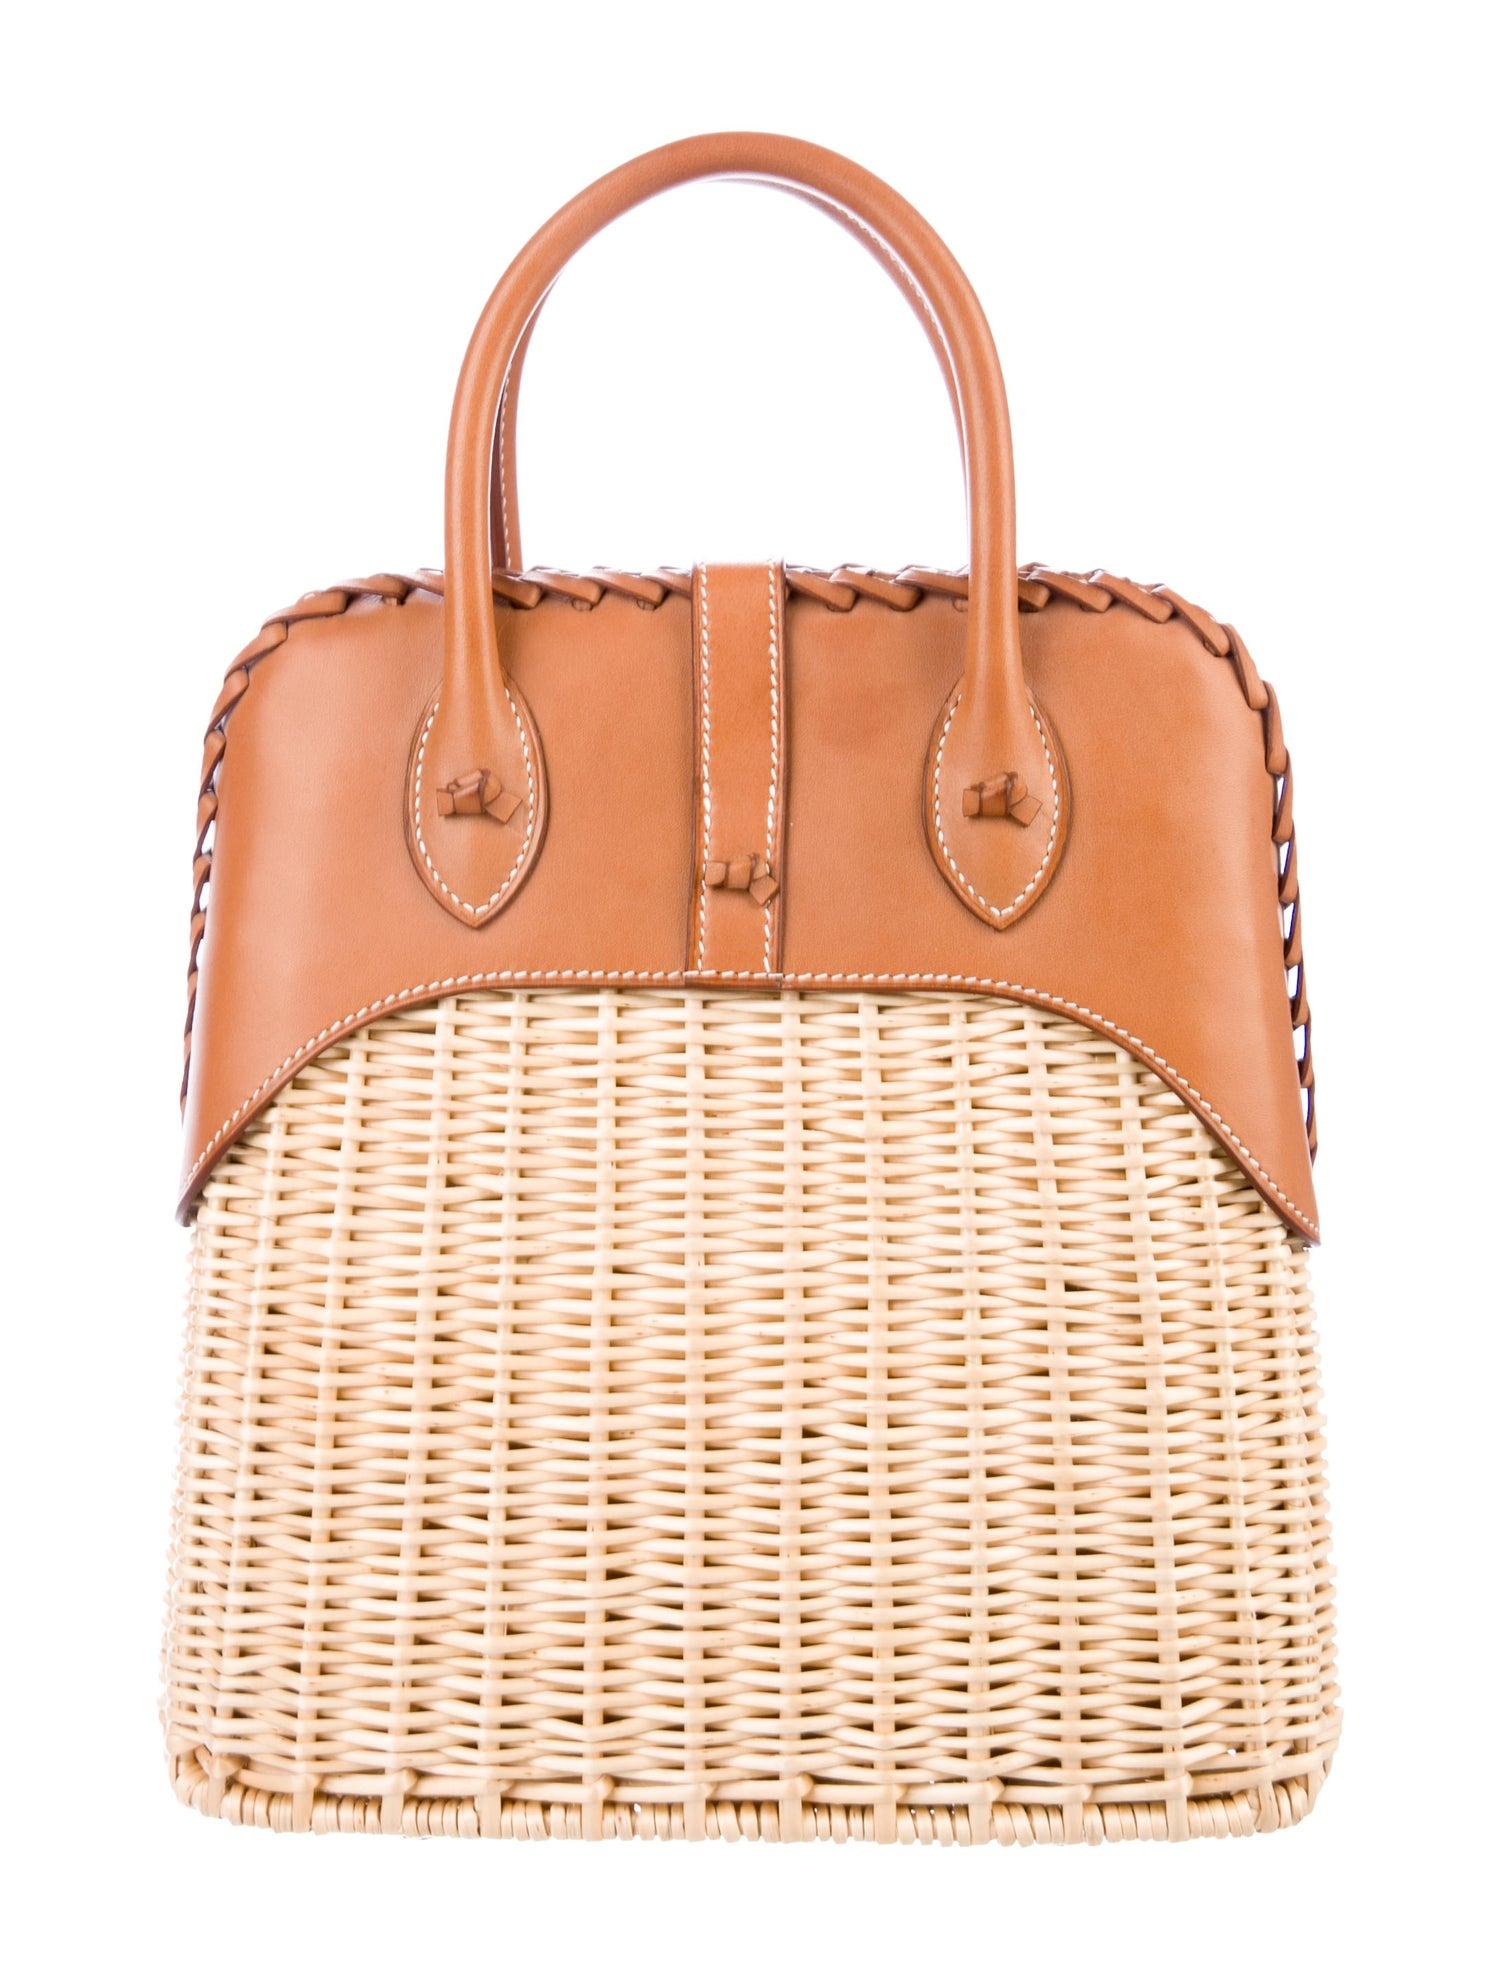 Orange Hermes NEW Tan Wicker Cognac Leather Top Handle Satchel Bag with Dust Bag & Box